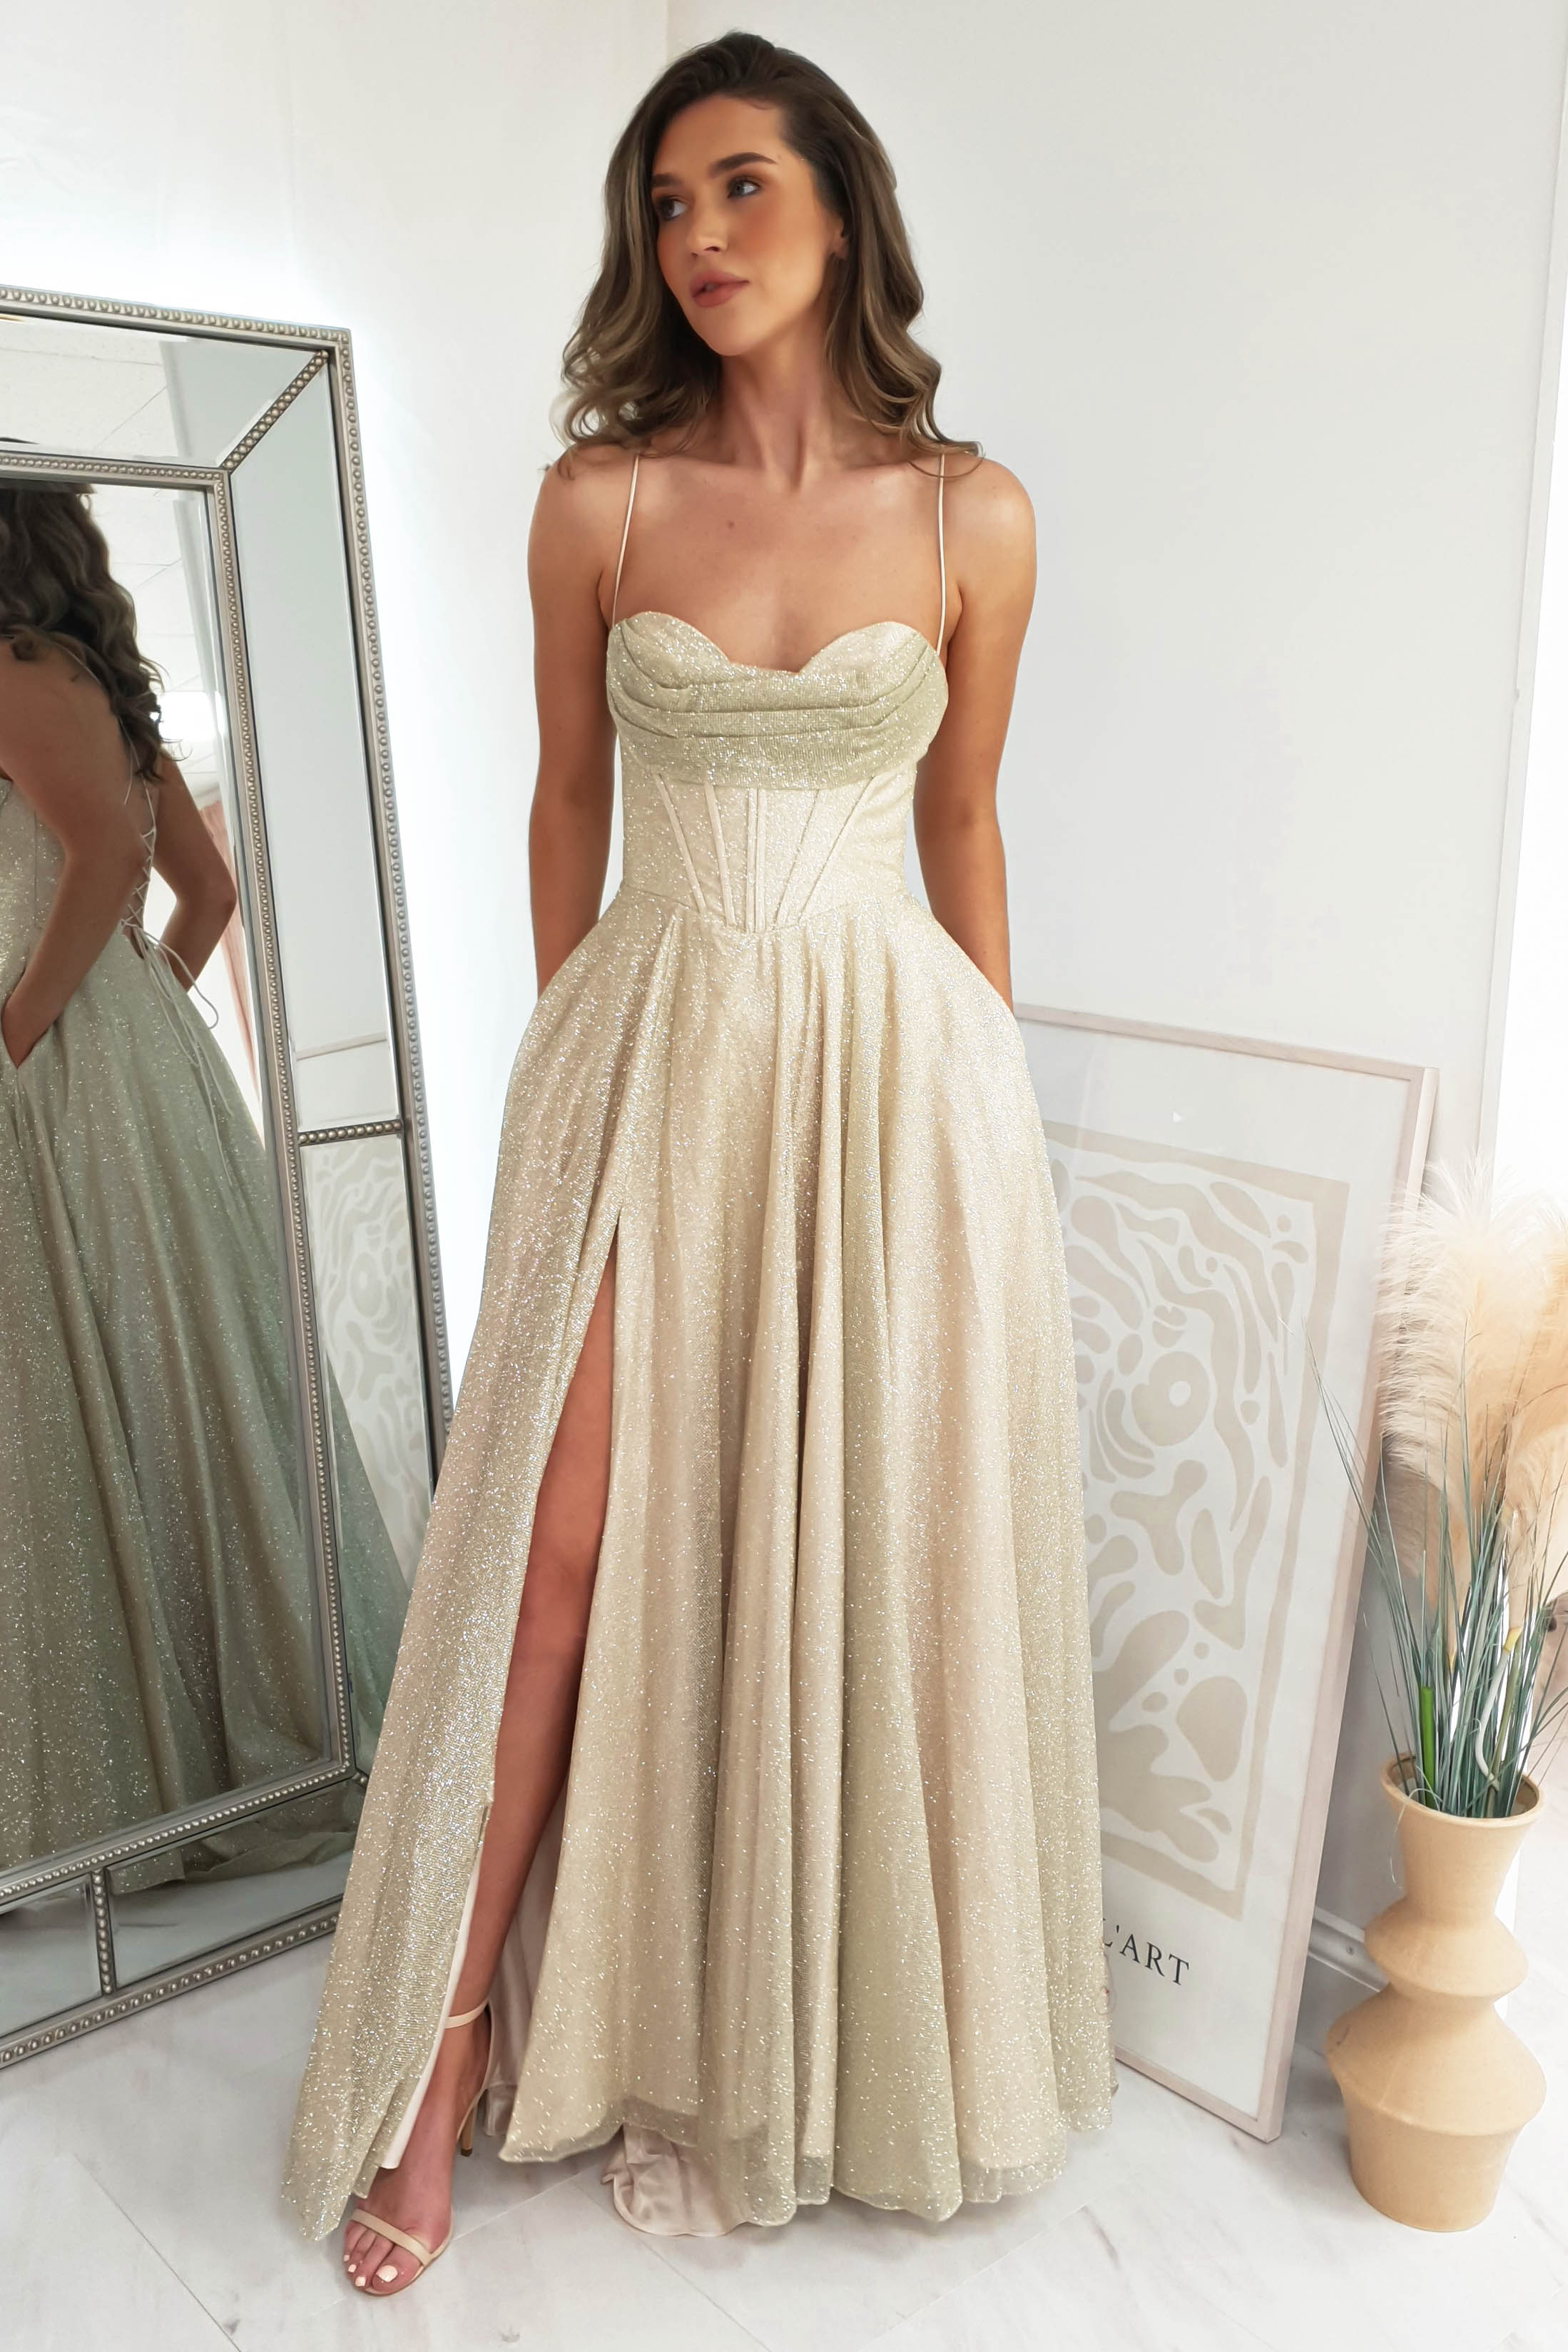 aurora-corset-glitter-gown-gold-dresses-30753523793985.jpg